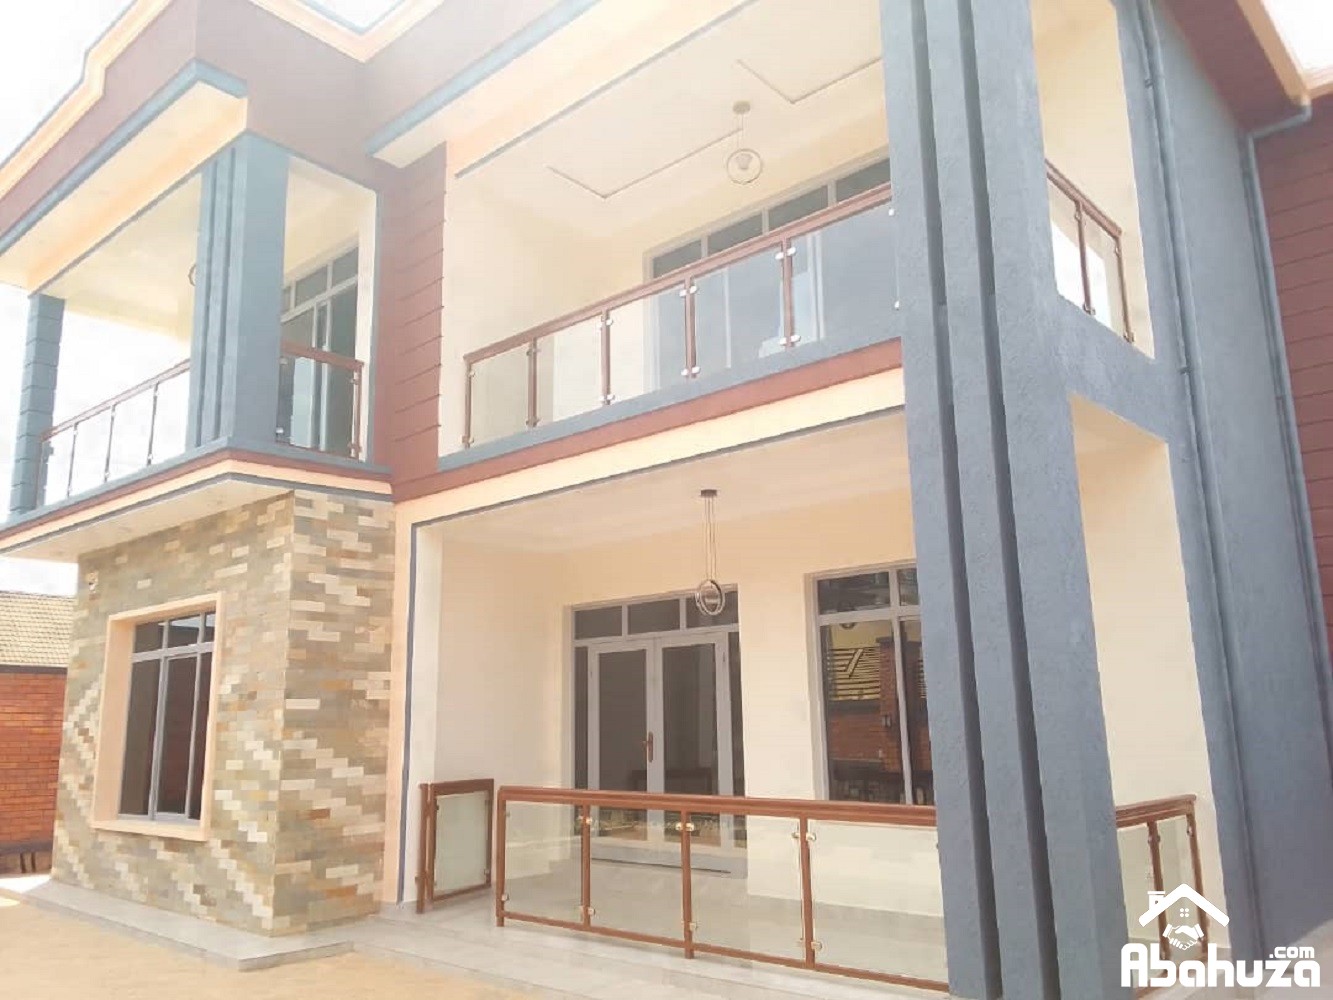 A NEW 6 BEDROOM HOUSE FOR SALE IN KIGALI AT KIBAGABAGA